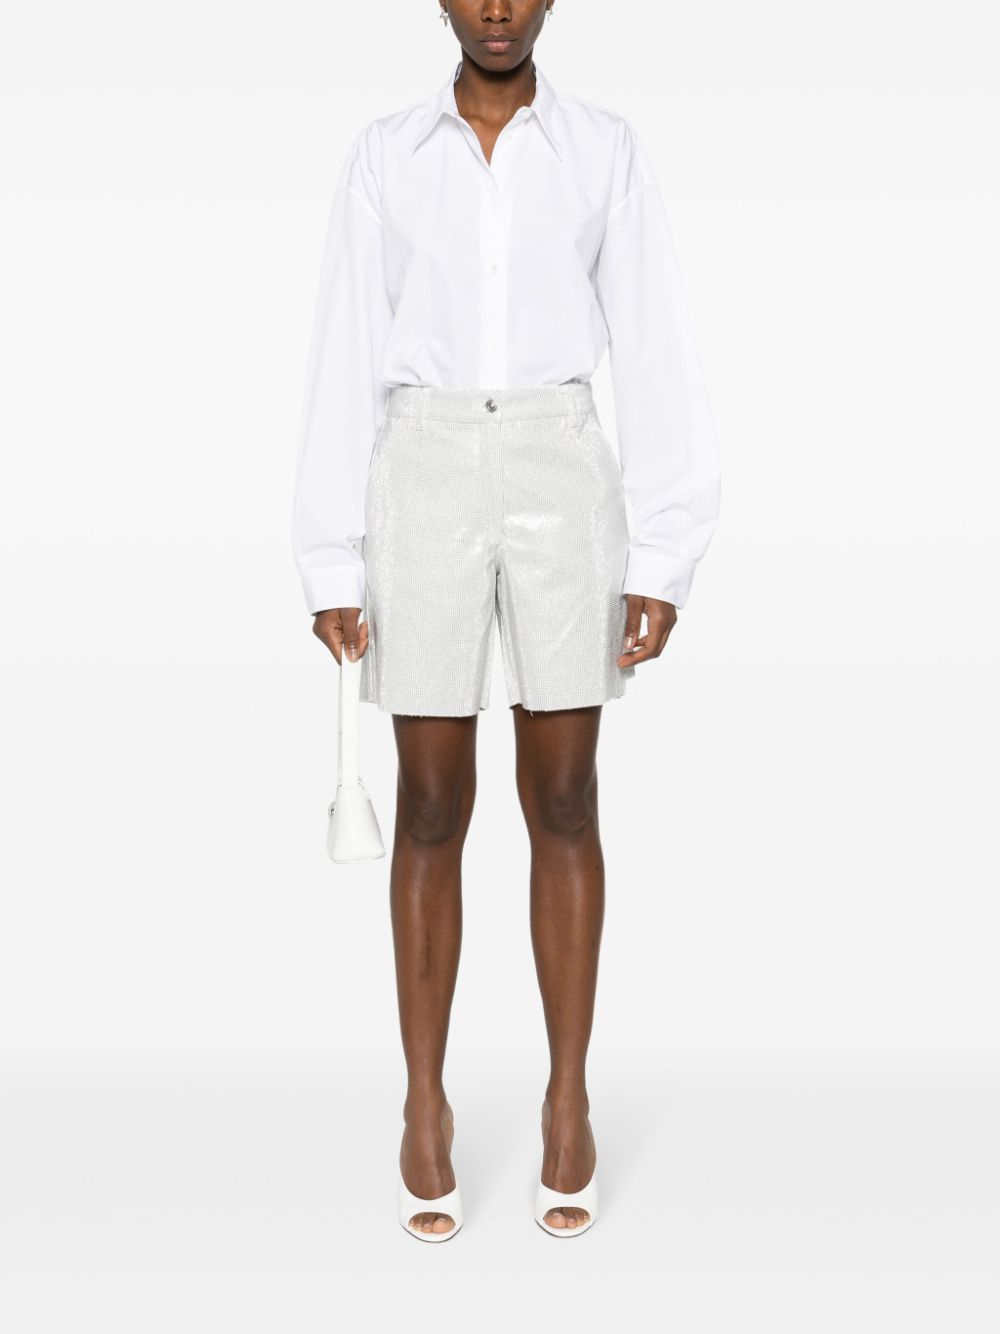 ERMANNO SCERVINO White Crystal Embellished High-Waisted Cotton Shorts